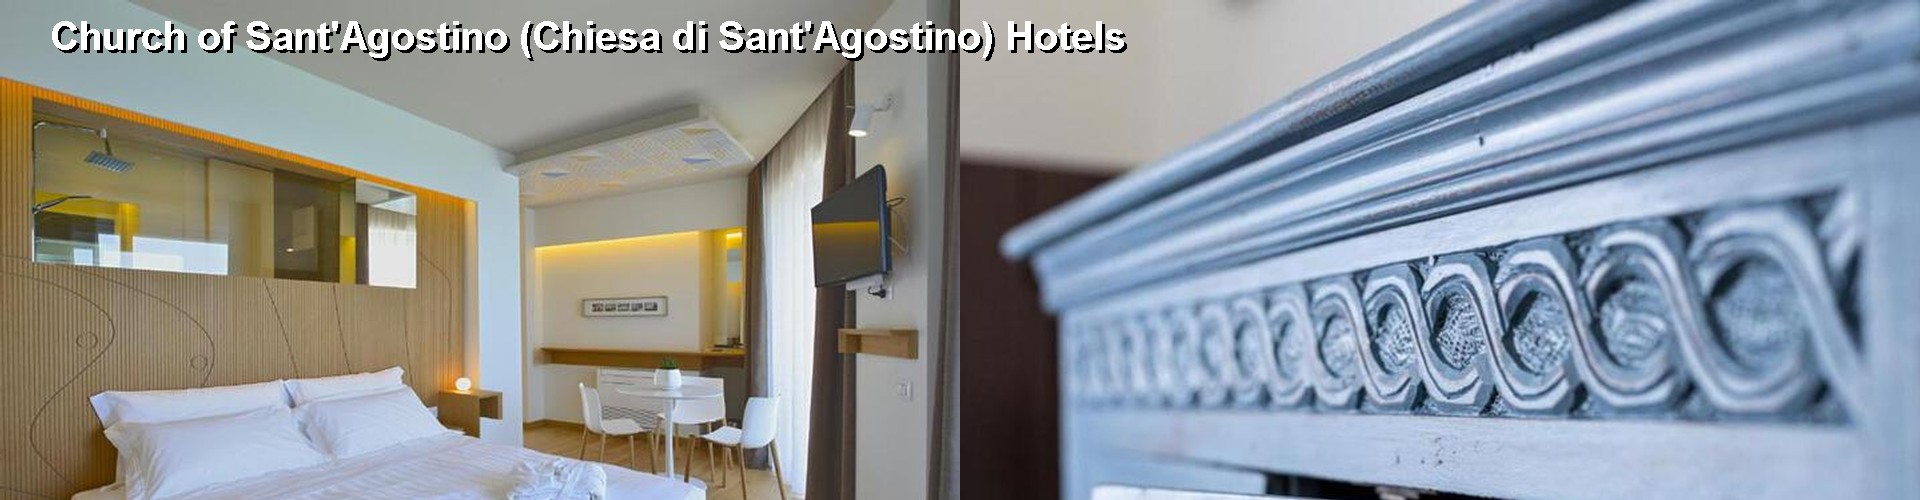 5 Best Hotels near Church of Sant'Agostino (Chiesa di Sant'Agostino)